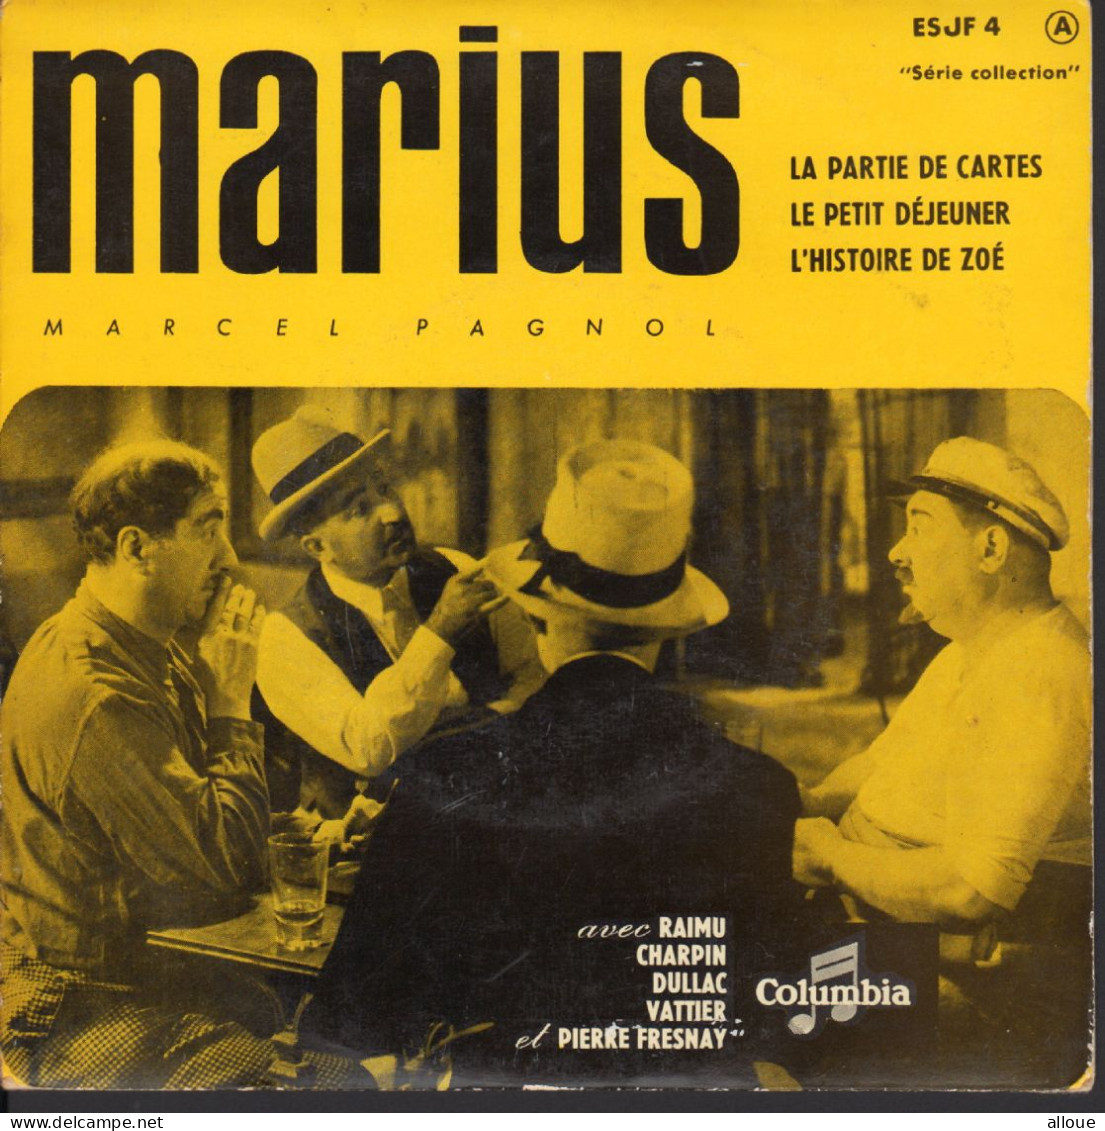 MARCEL PAGNOL - MARIUS LA PARTIE DE CARTES + 2 - Soundtracks, Film Music